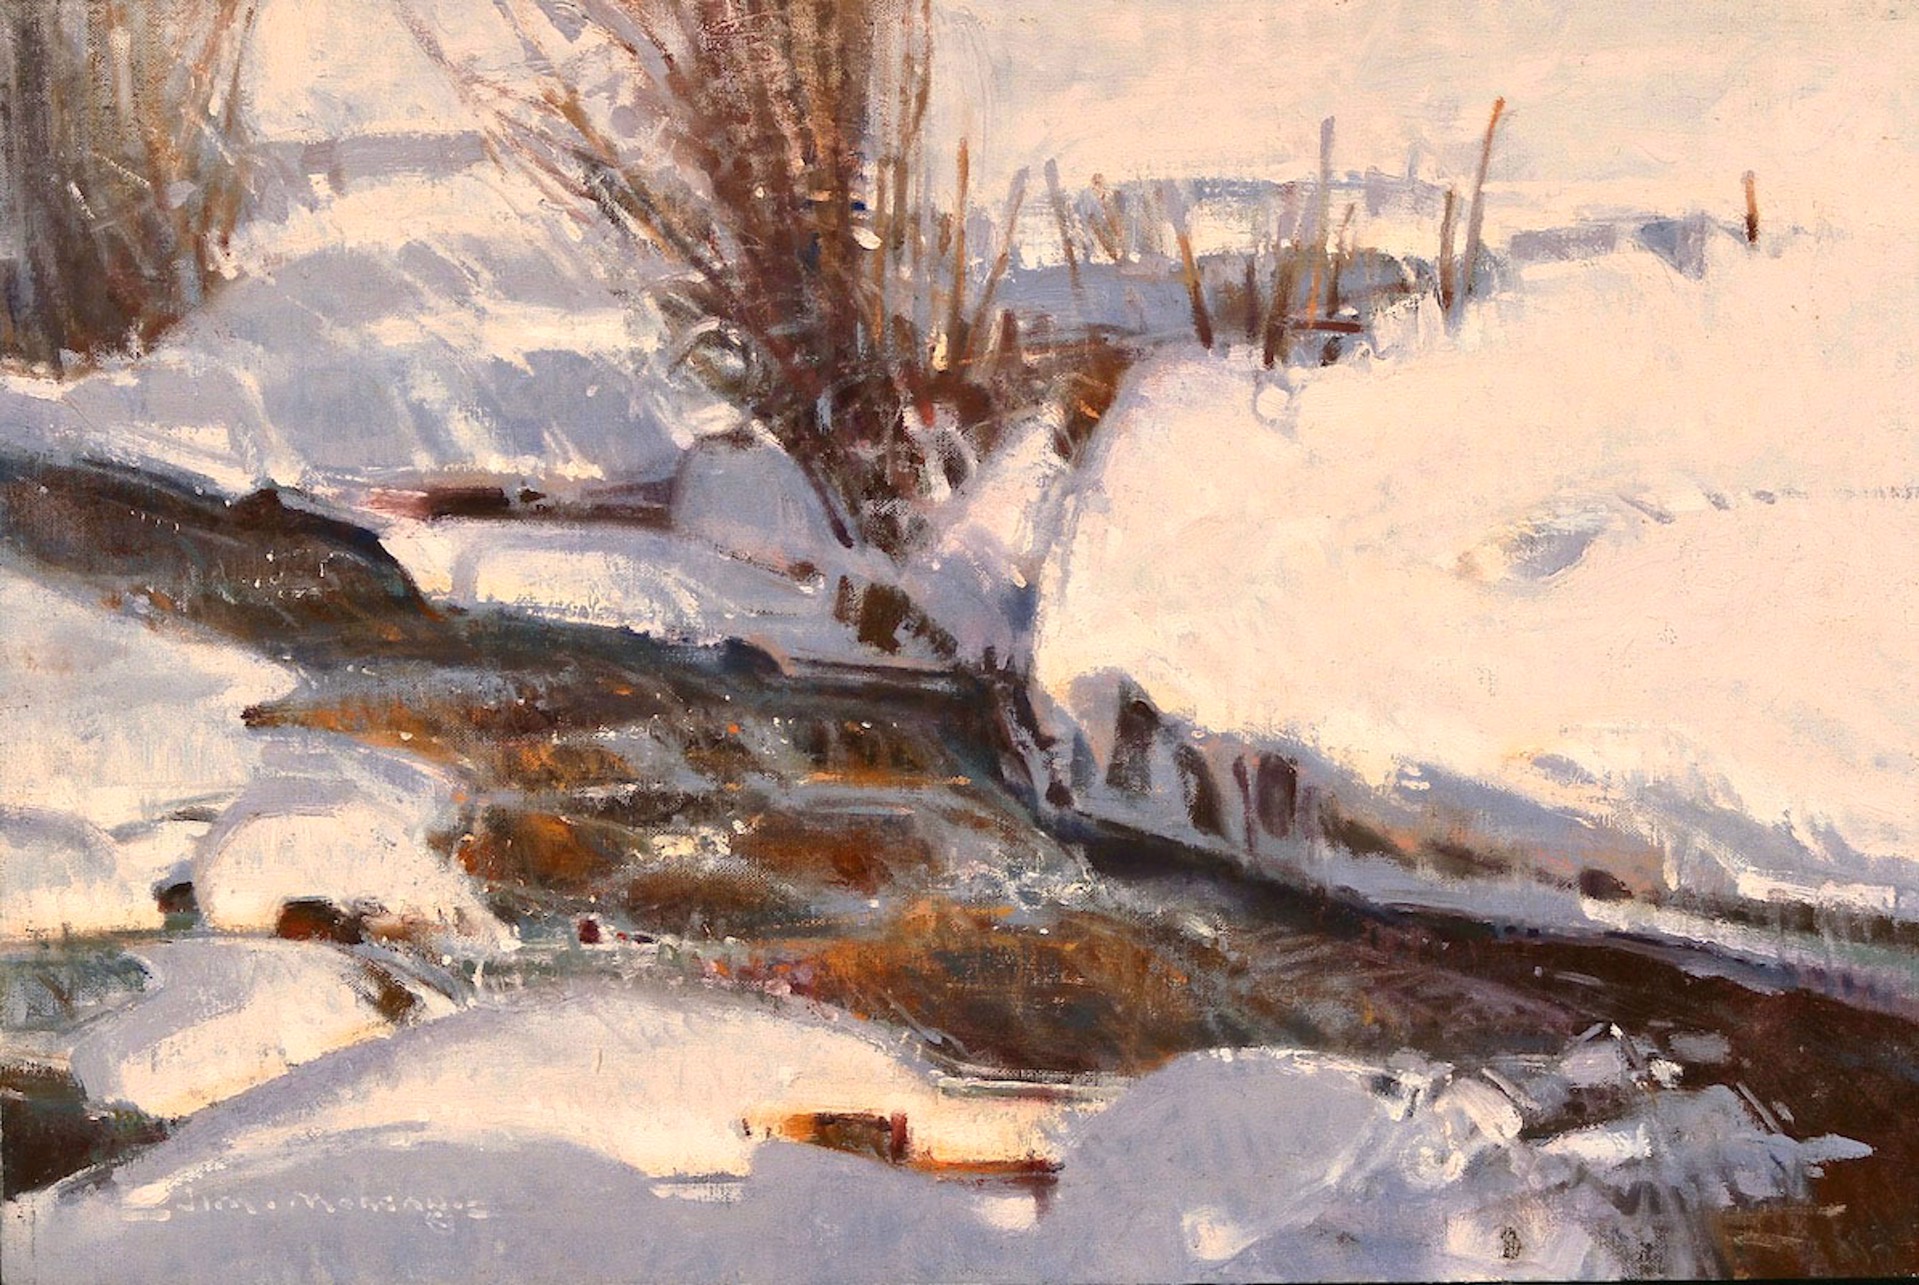 Winter Stream with Mink Tracks by Jim Morgan